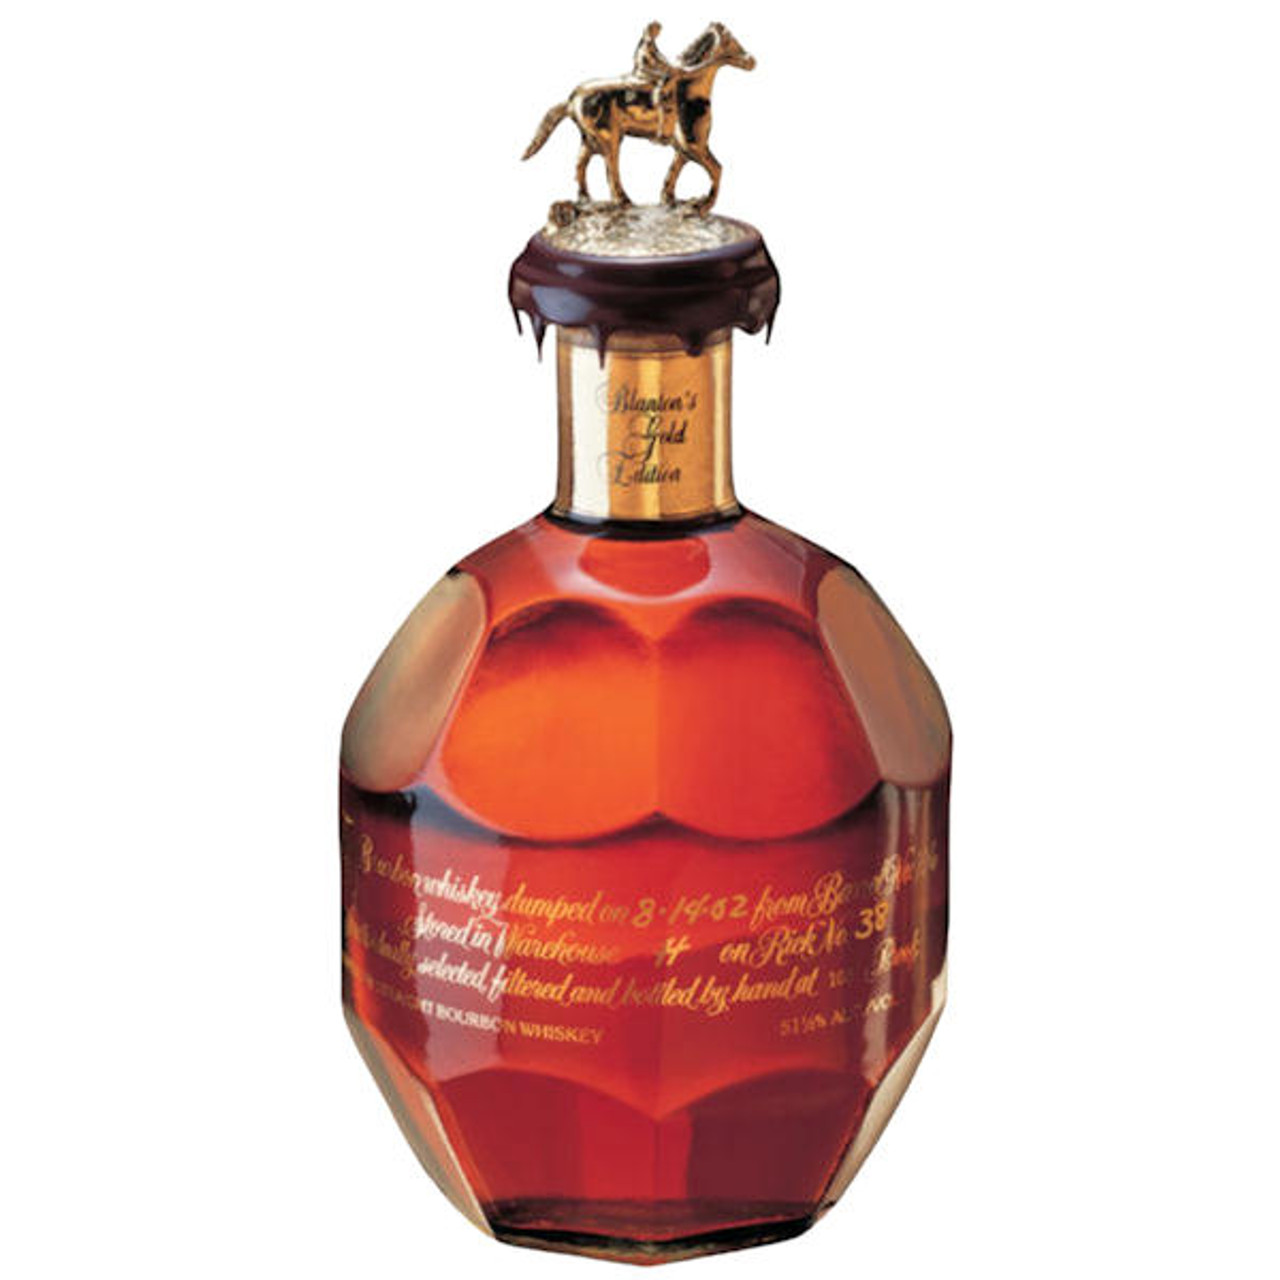 Blanton's Gold Edition Kentucky Straight Bourbon Whiskey Bottle – Five  Towns Wine & Liquor